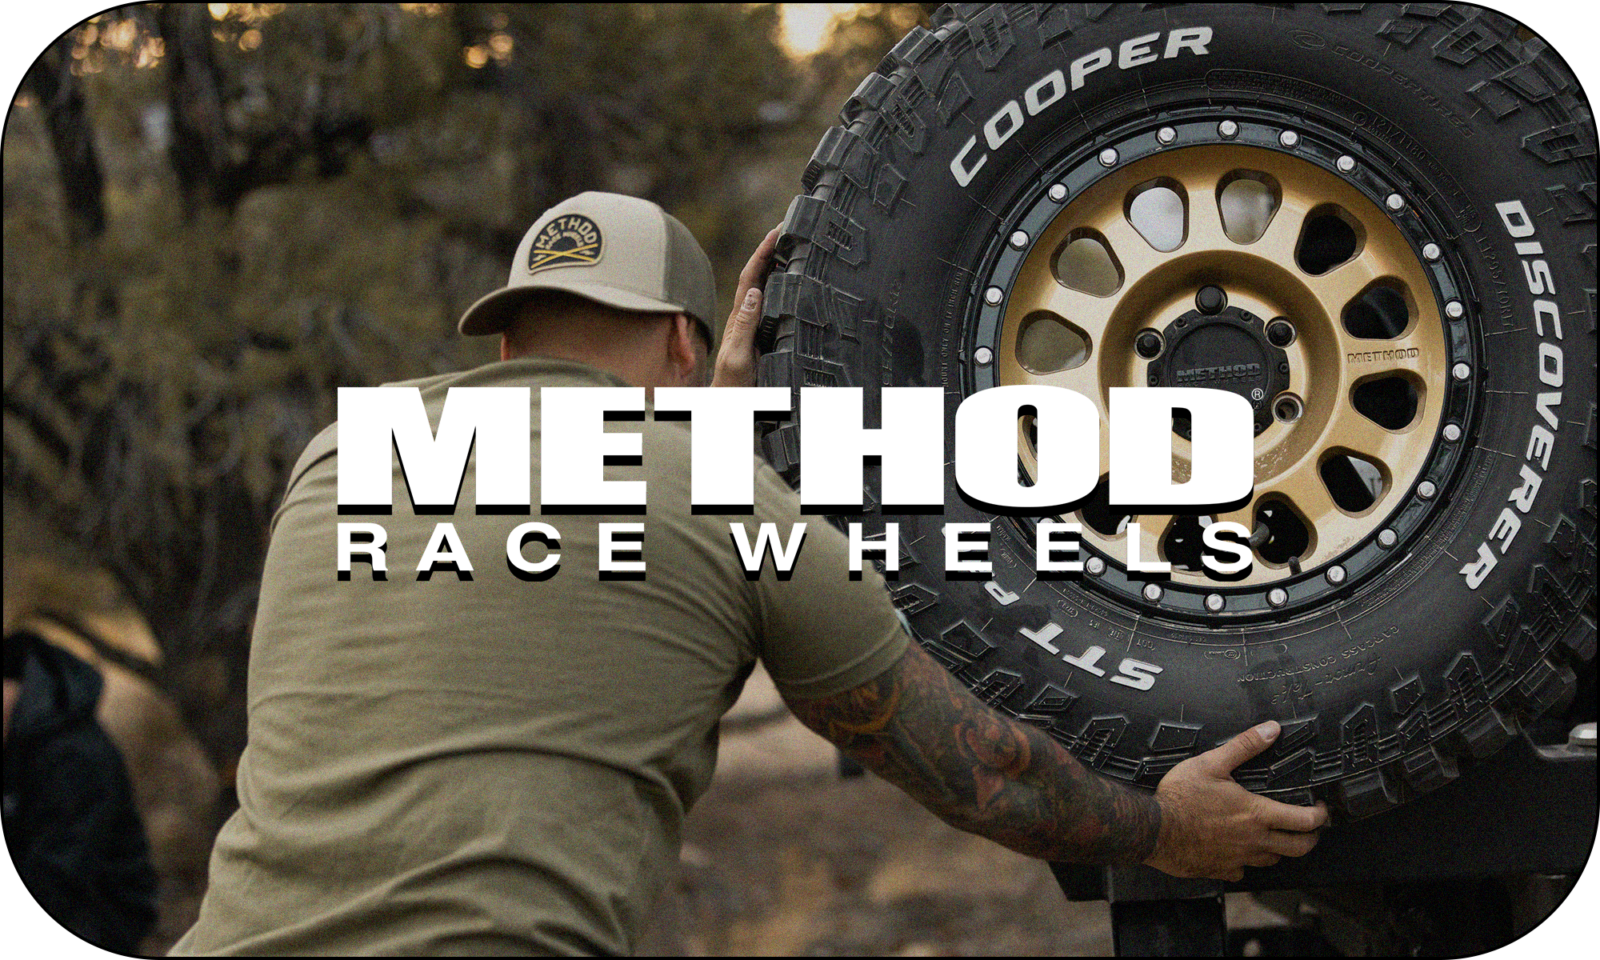 method race wheels